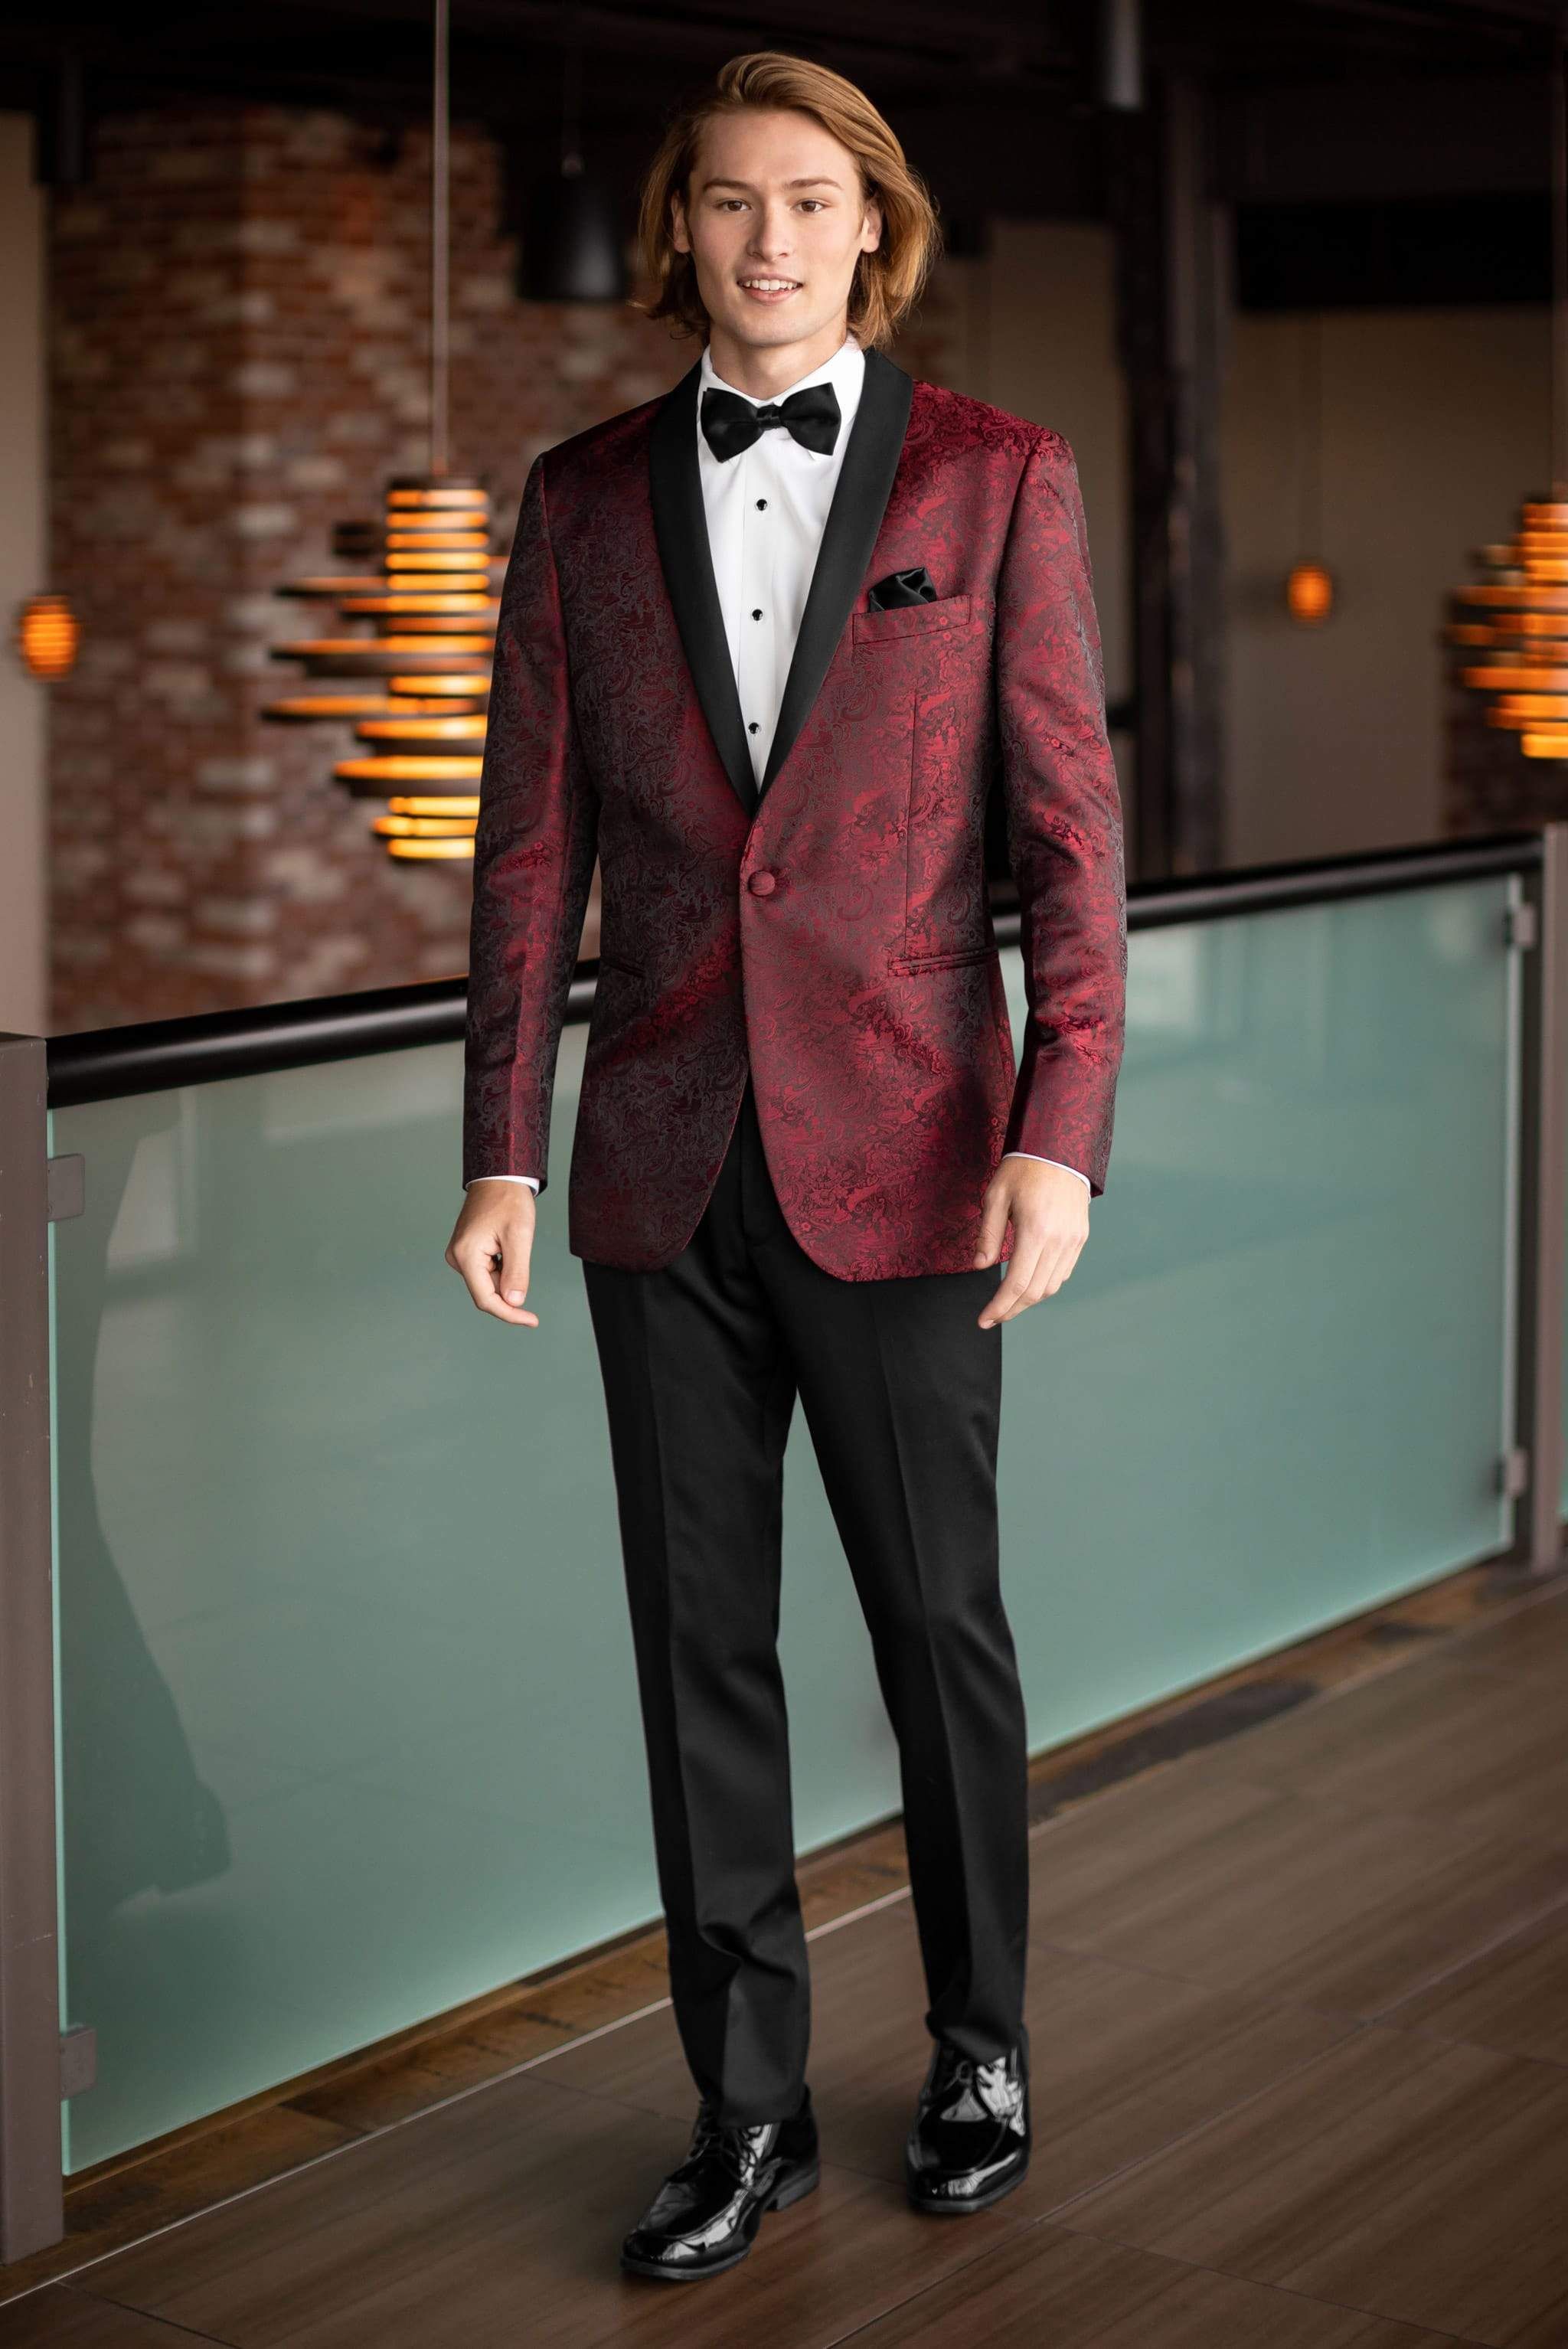 formal dinner suit